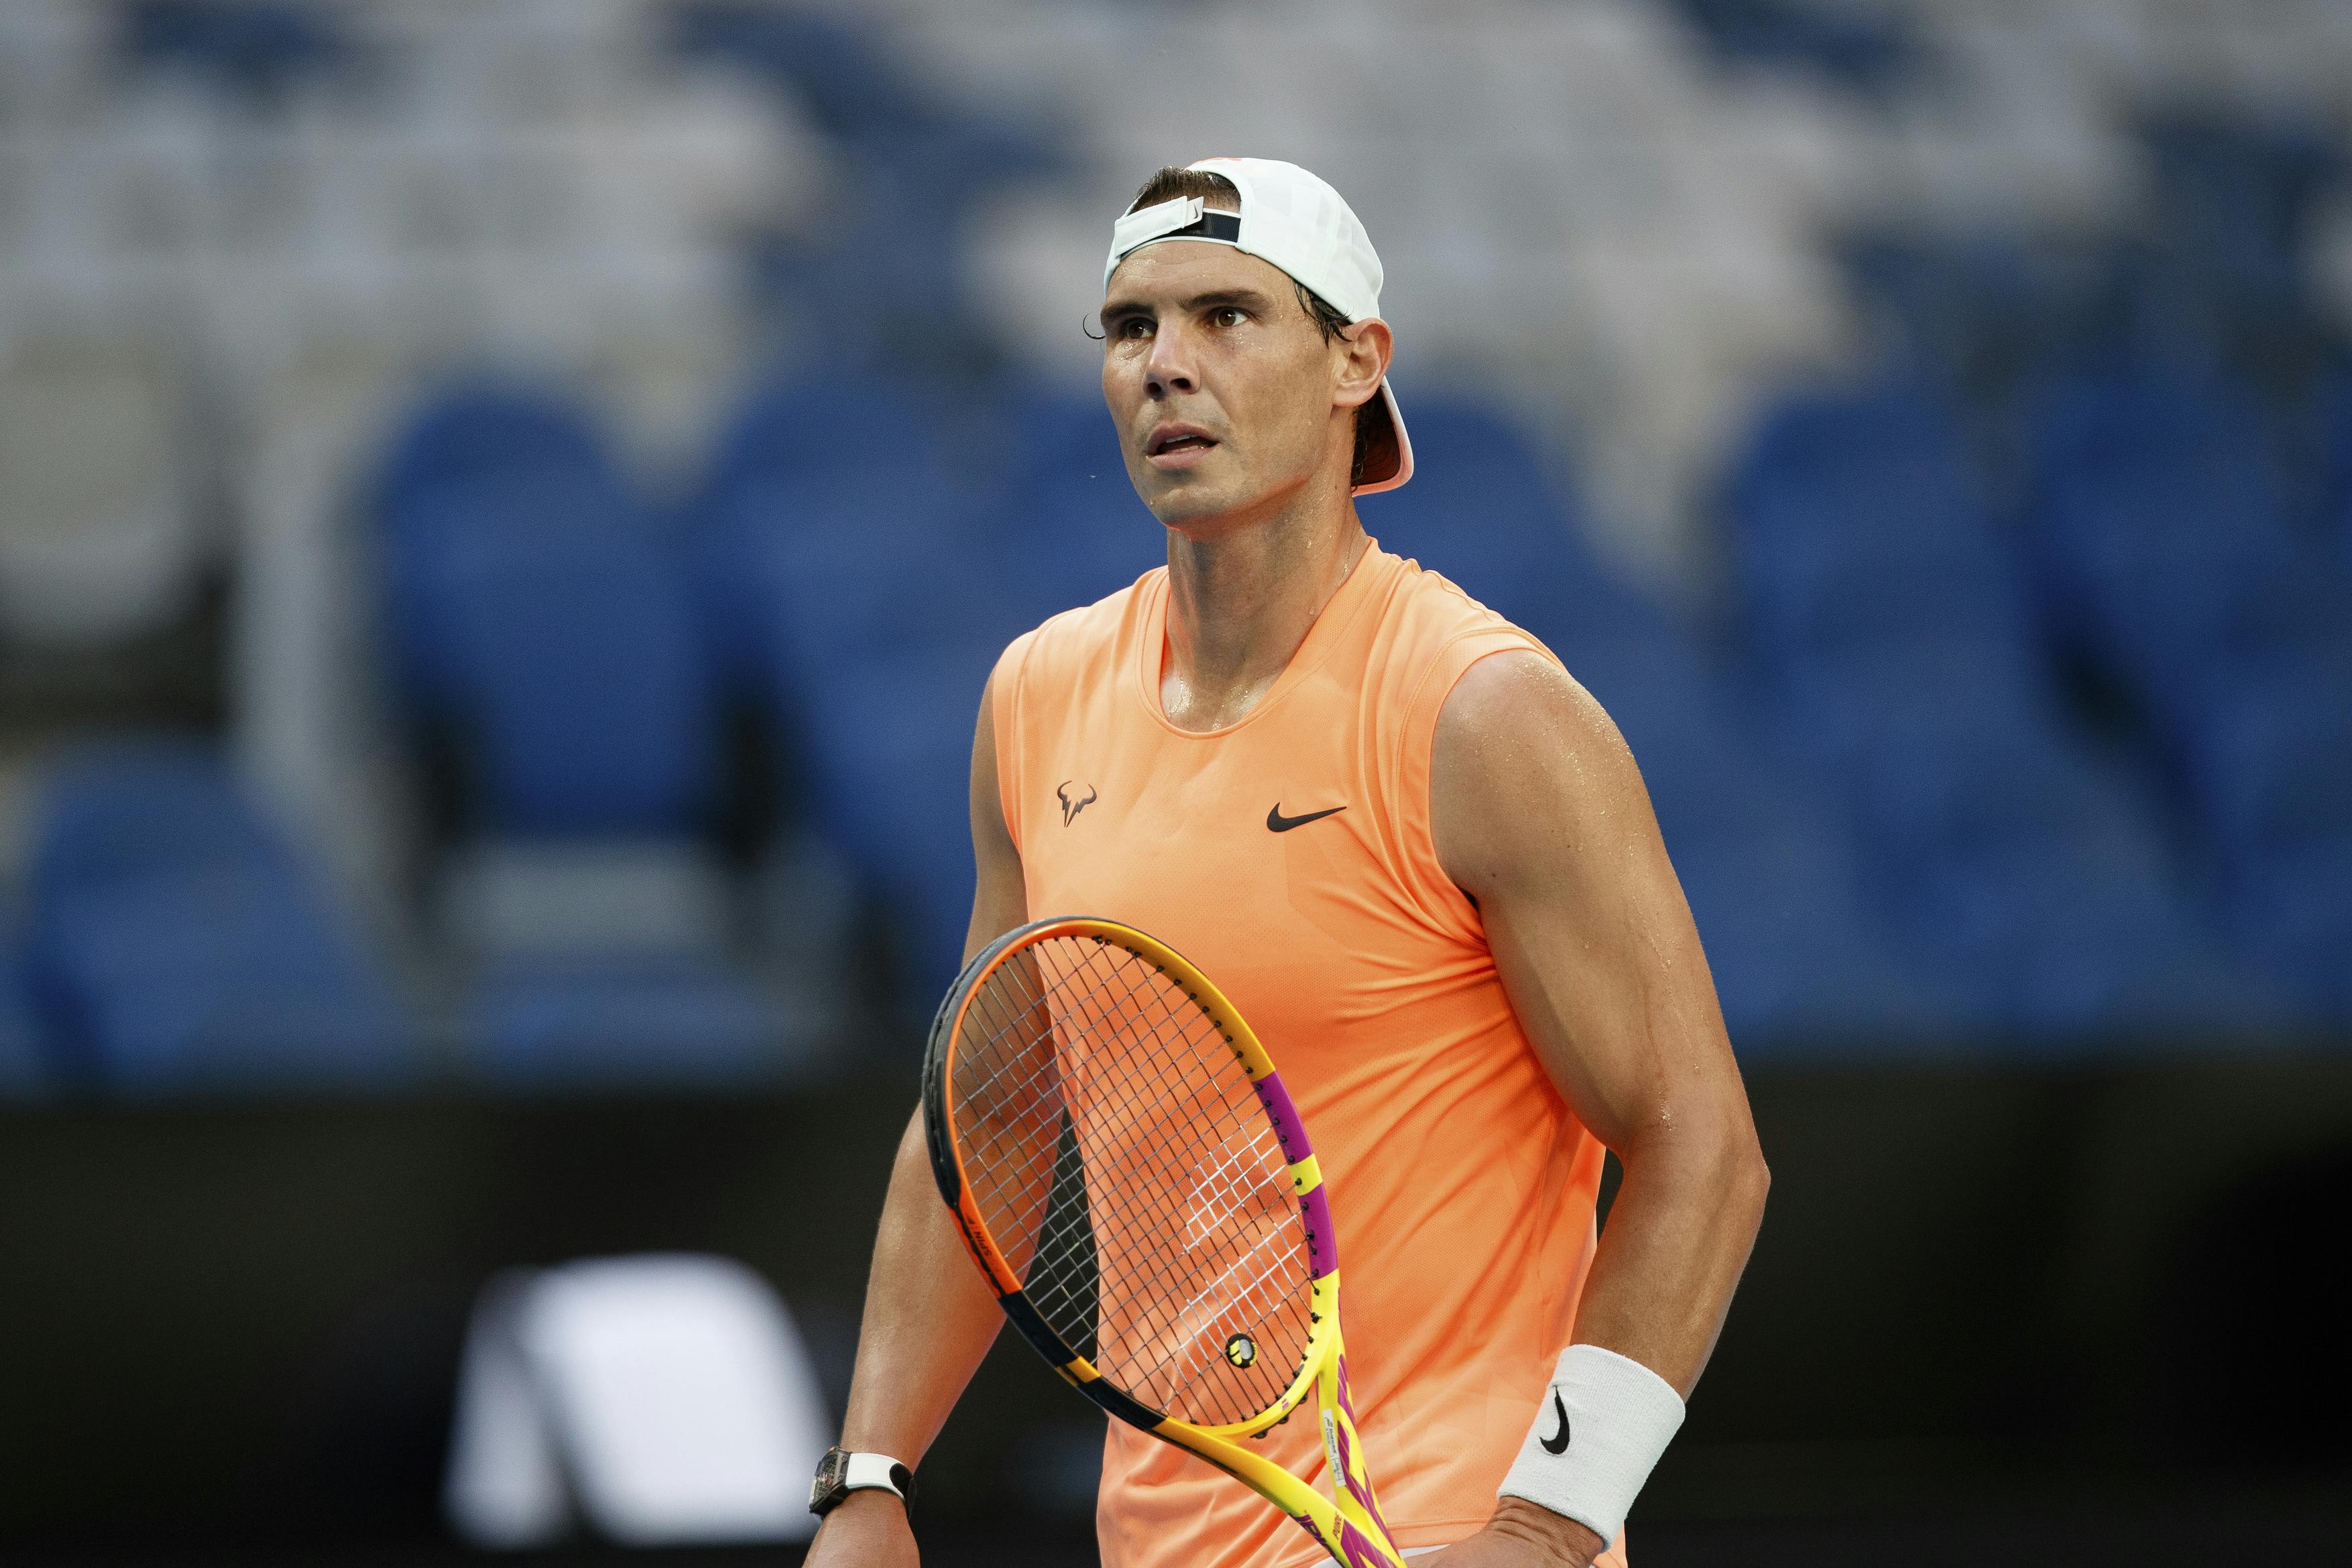 Nadal remaining upbeat despite Australian Open disruption Roland